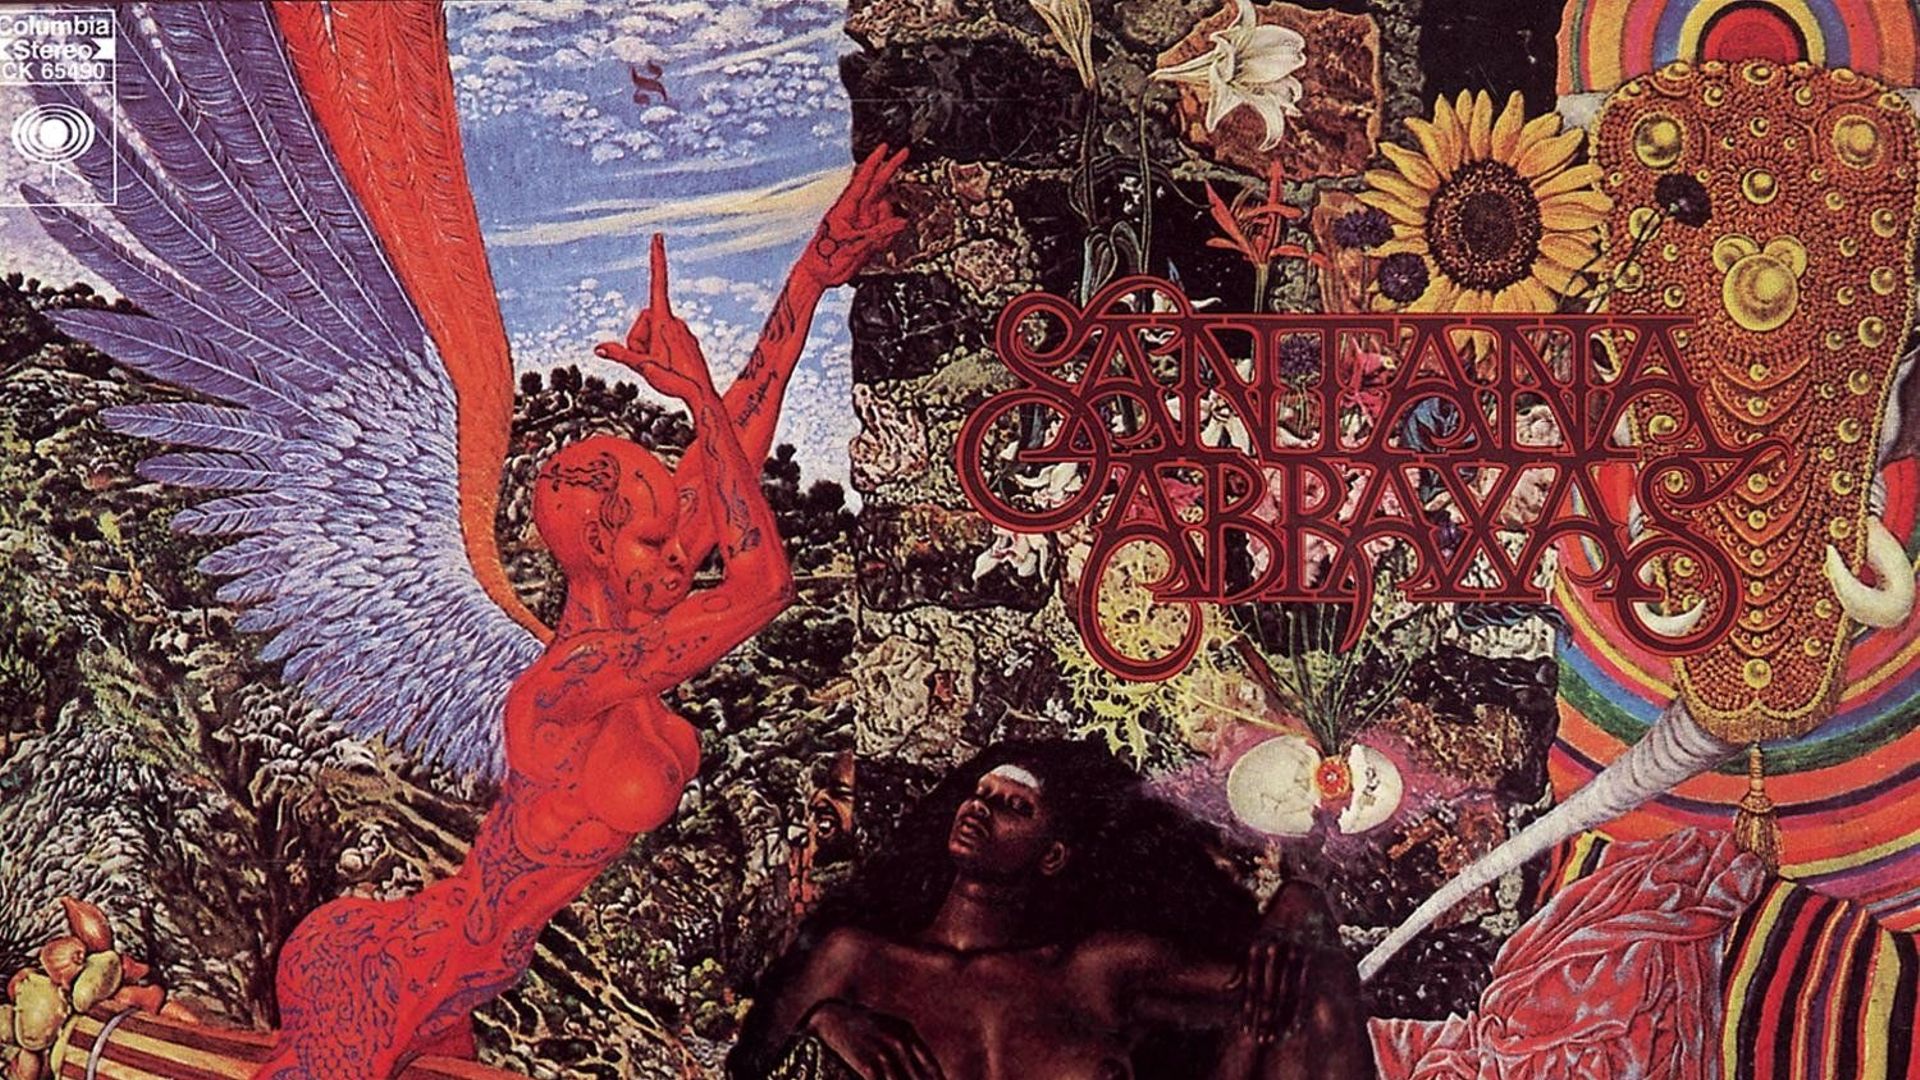 Les 50 ans d'"Abraxas" de Santana